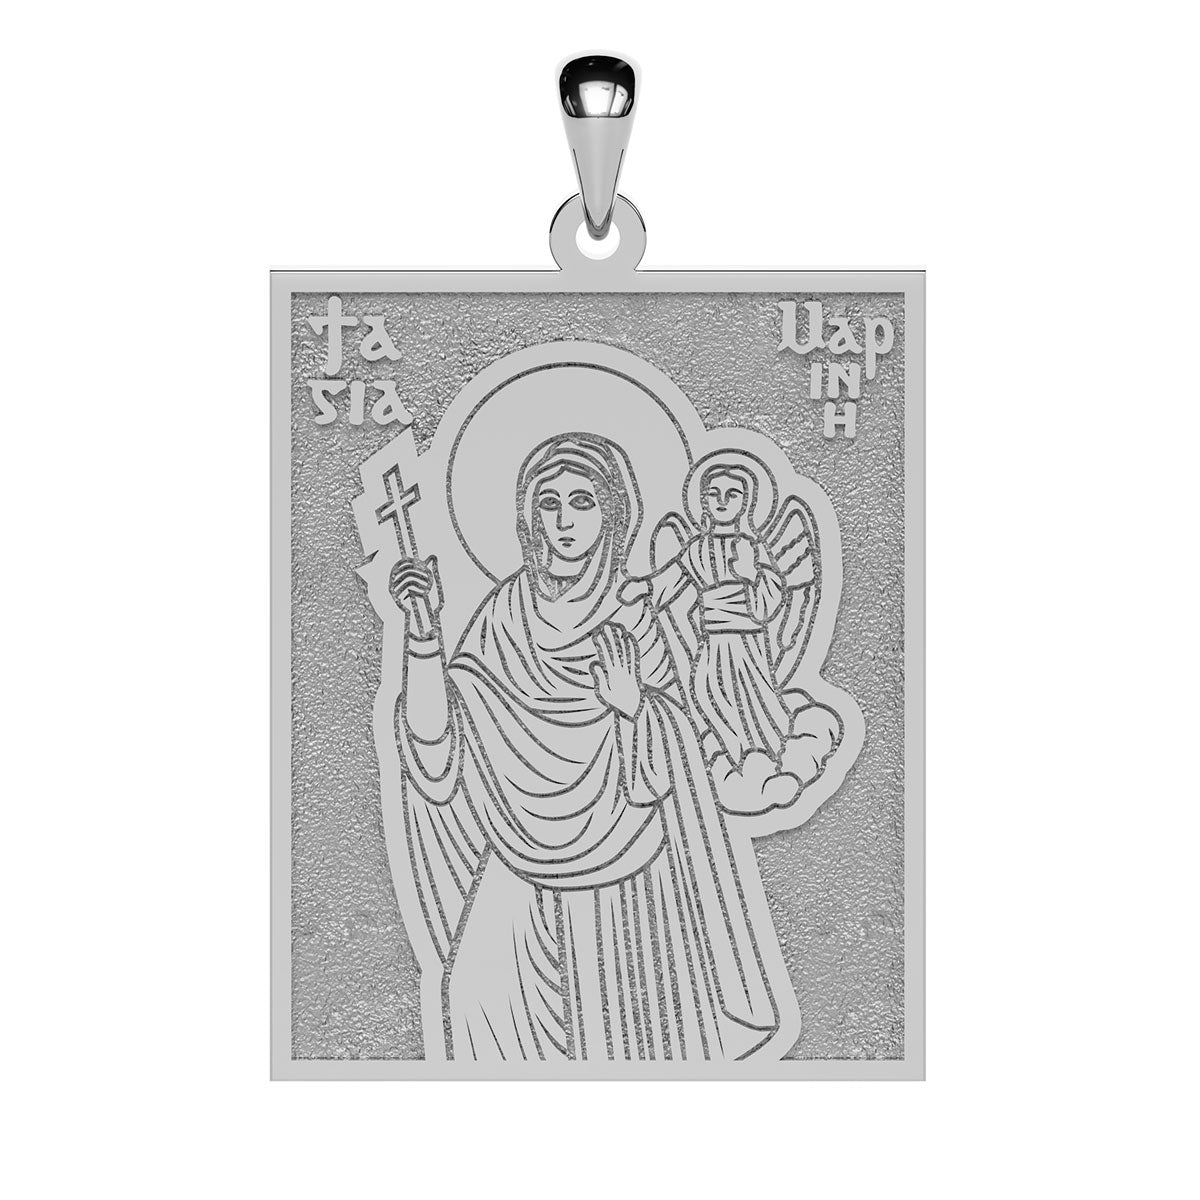 Saint Marina the Monk Coptic Orthodox Icon Tag Medal